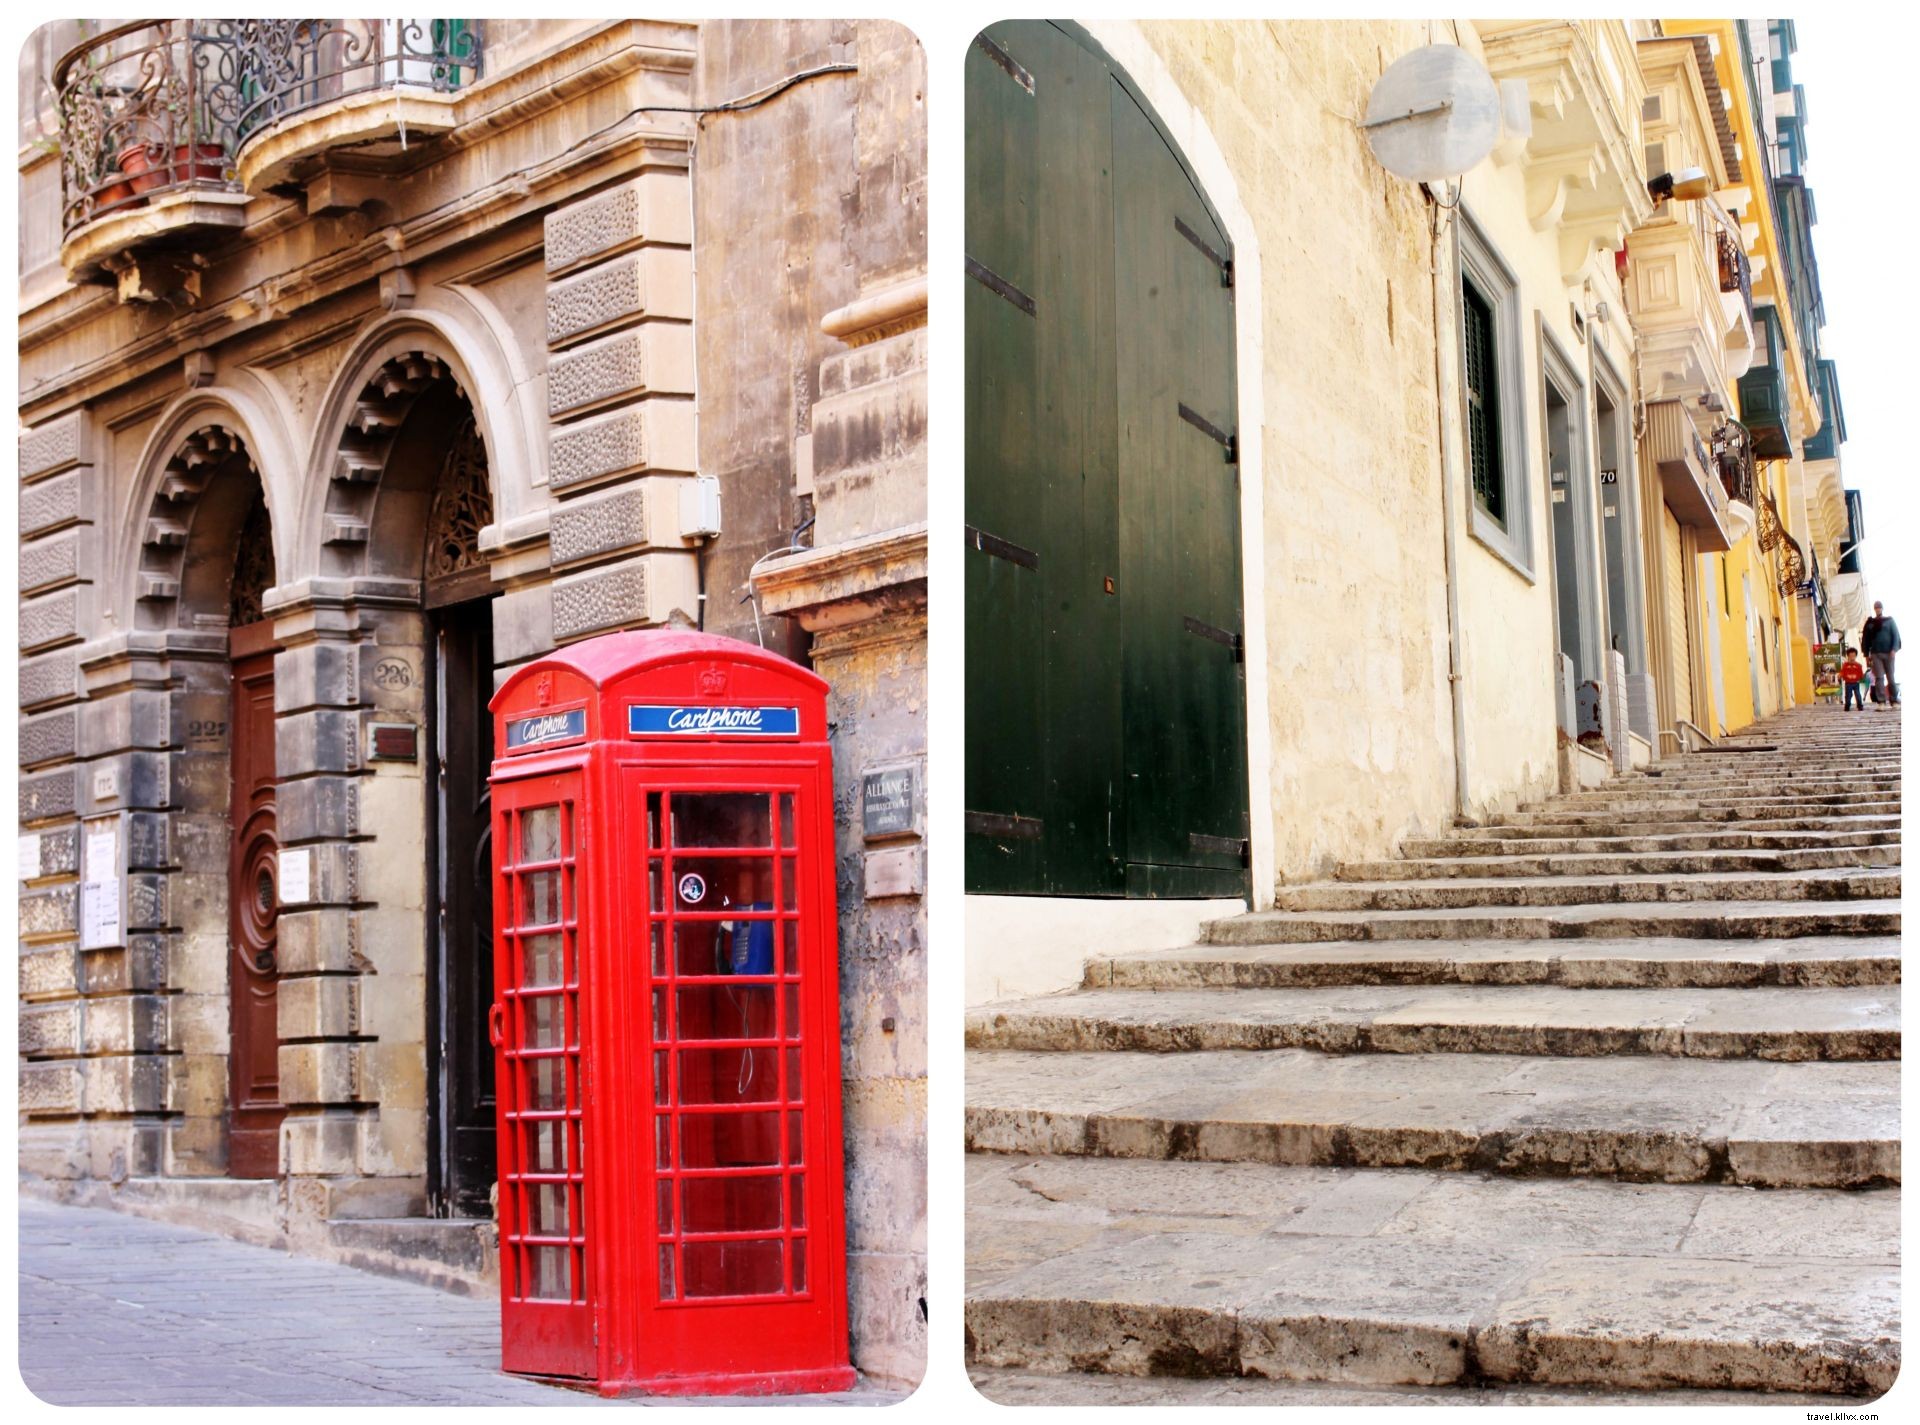 Valletta:a capital mais subestimada da Europa